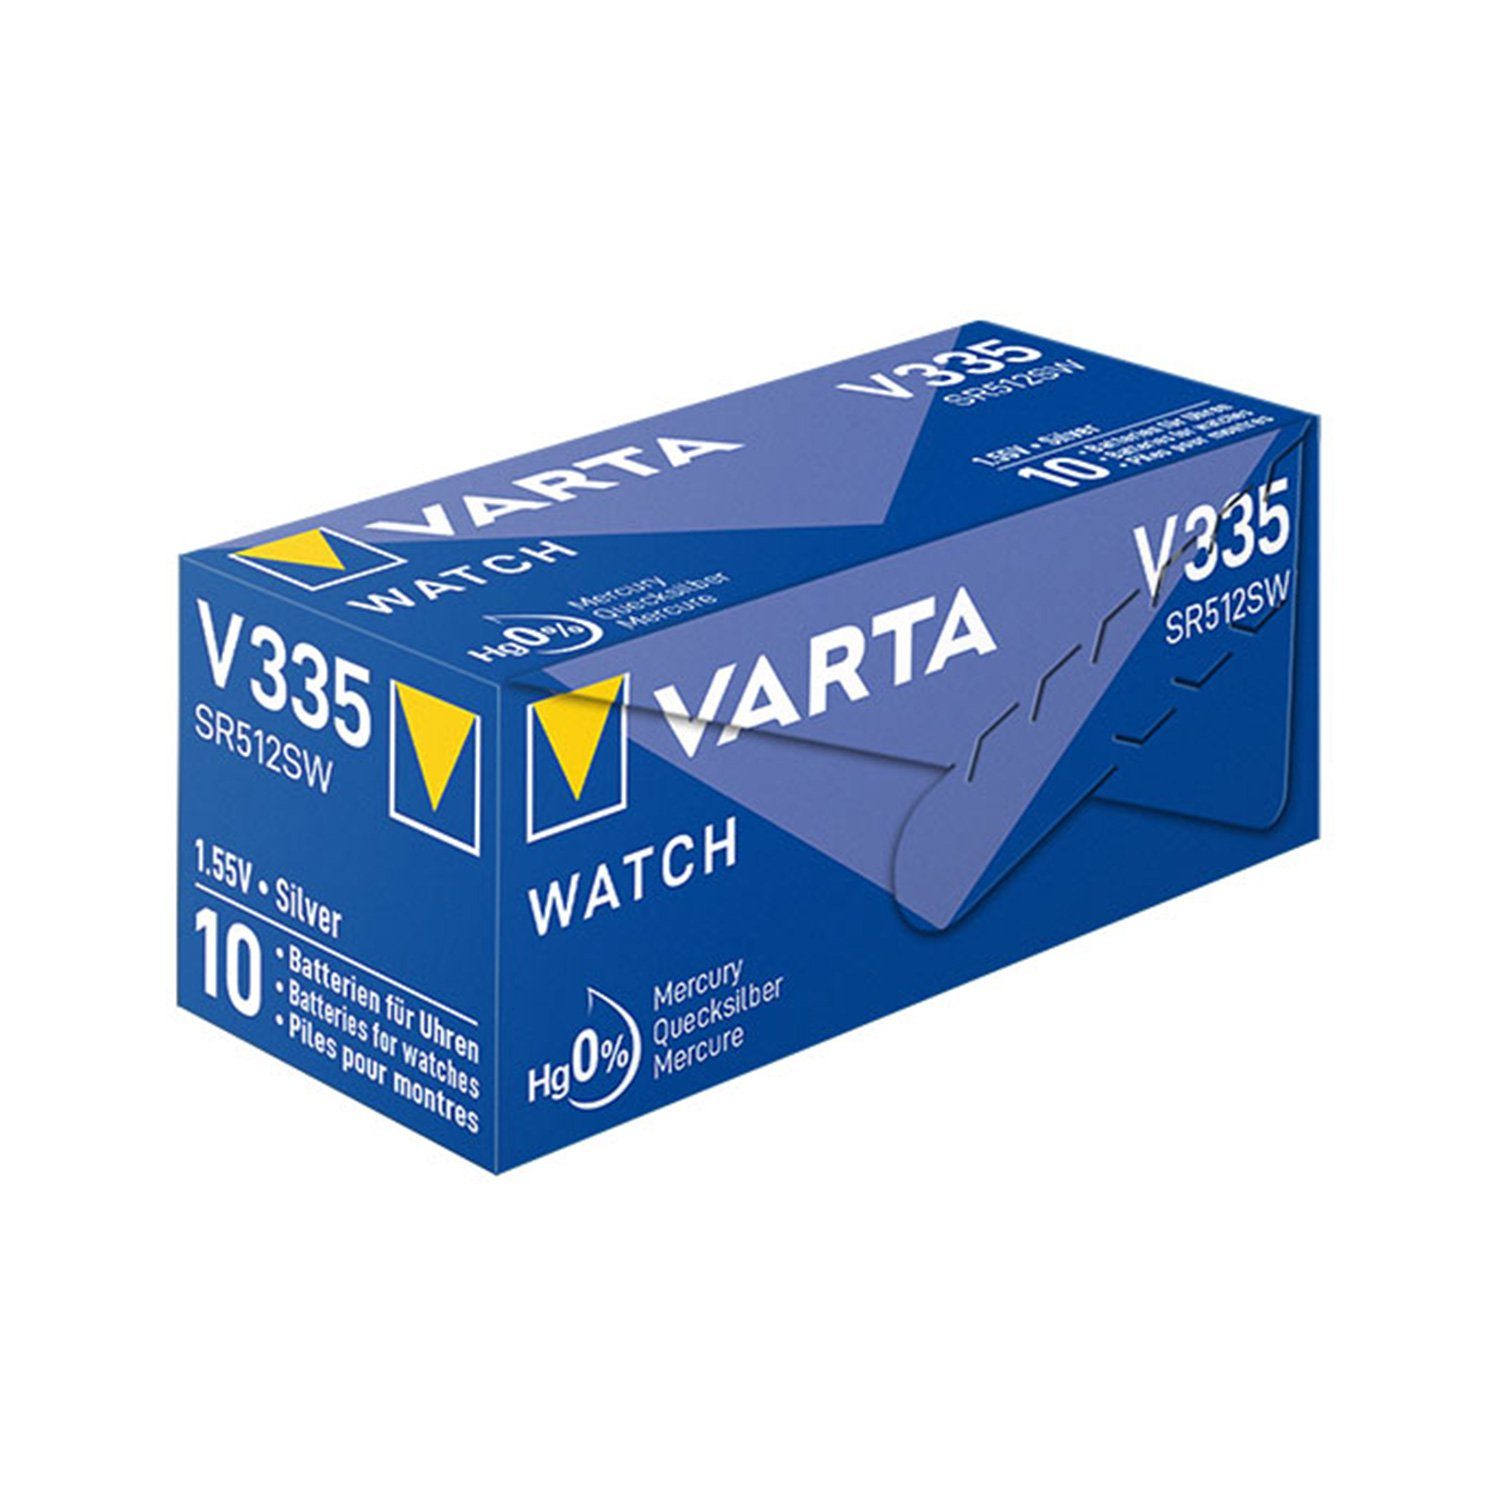 VARTA Varta 335 Batterie Knopfzelle